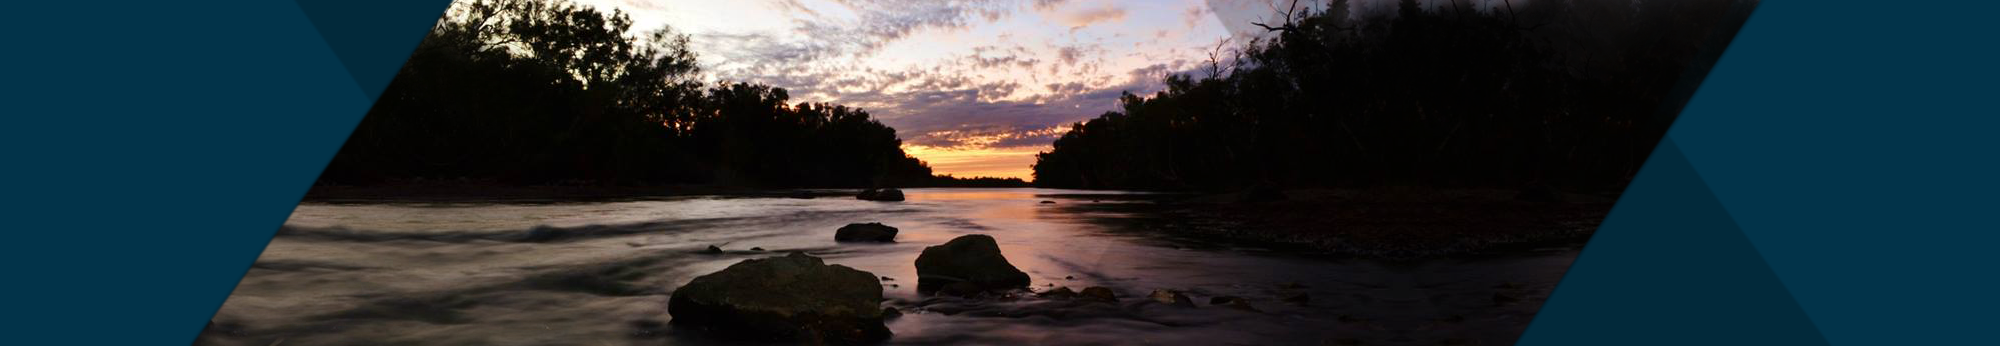 50.sunset-river_banner-copy